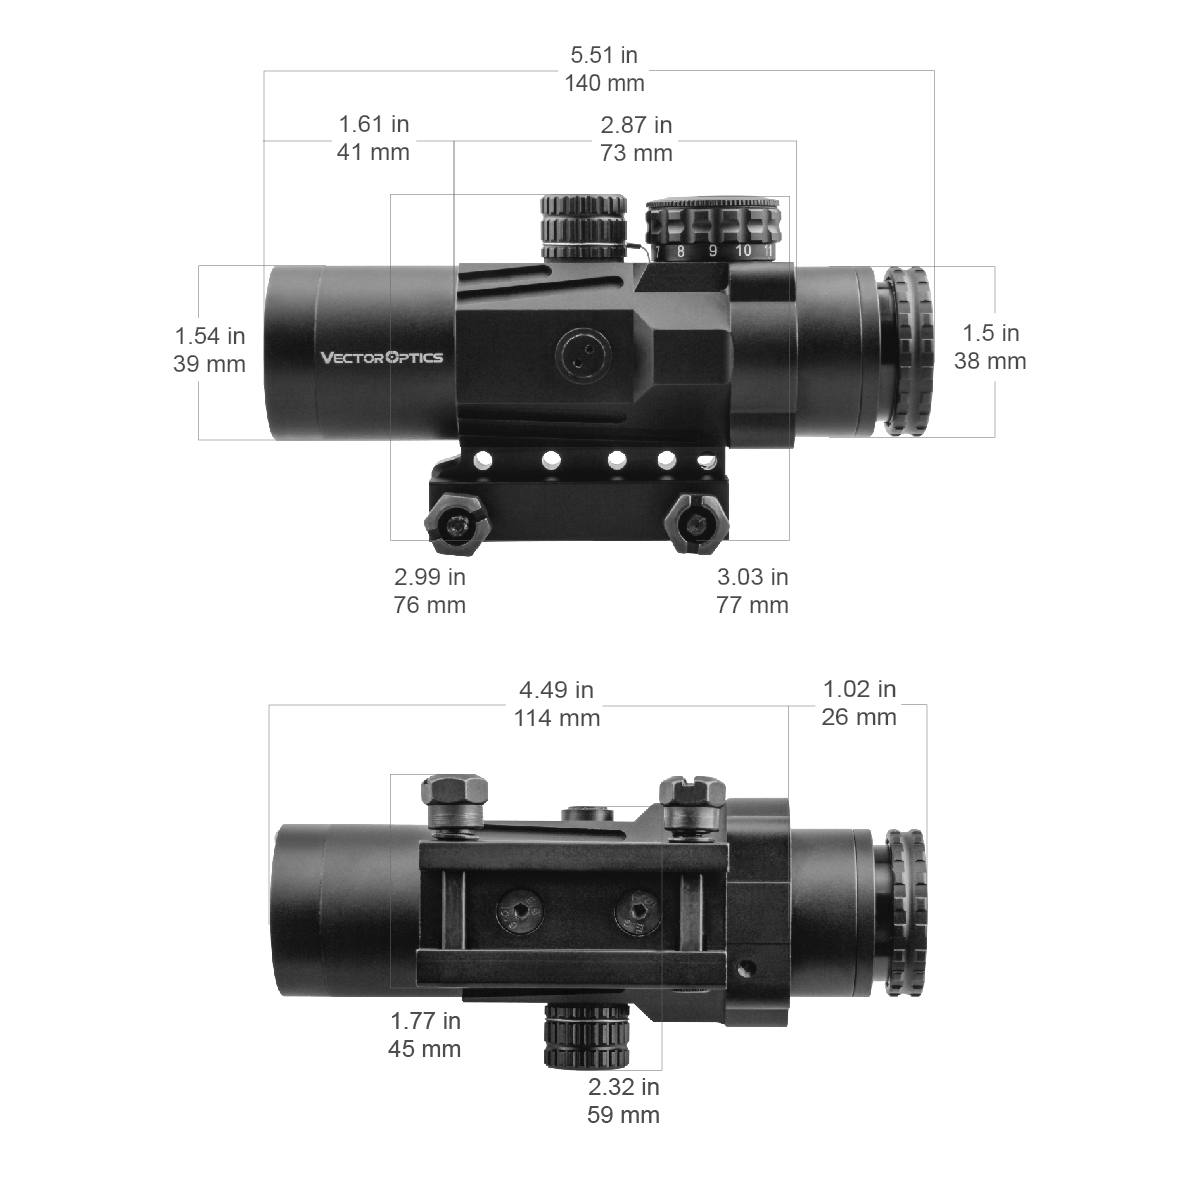 Calypos 3x32SFP Prism Scope Riflescope-Vector Optics - Practical 